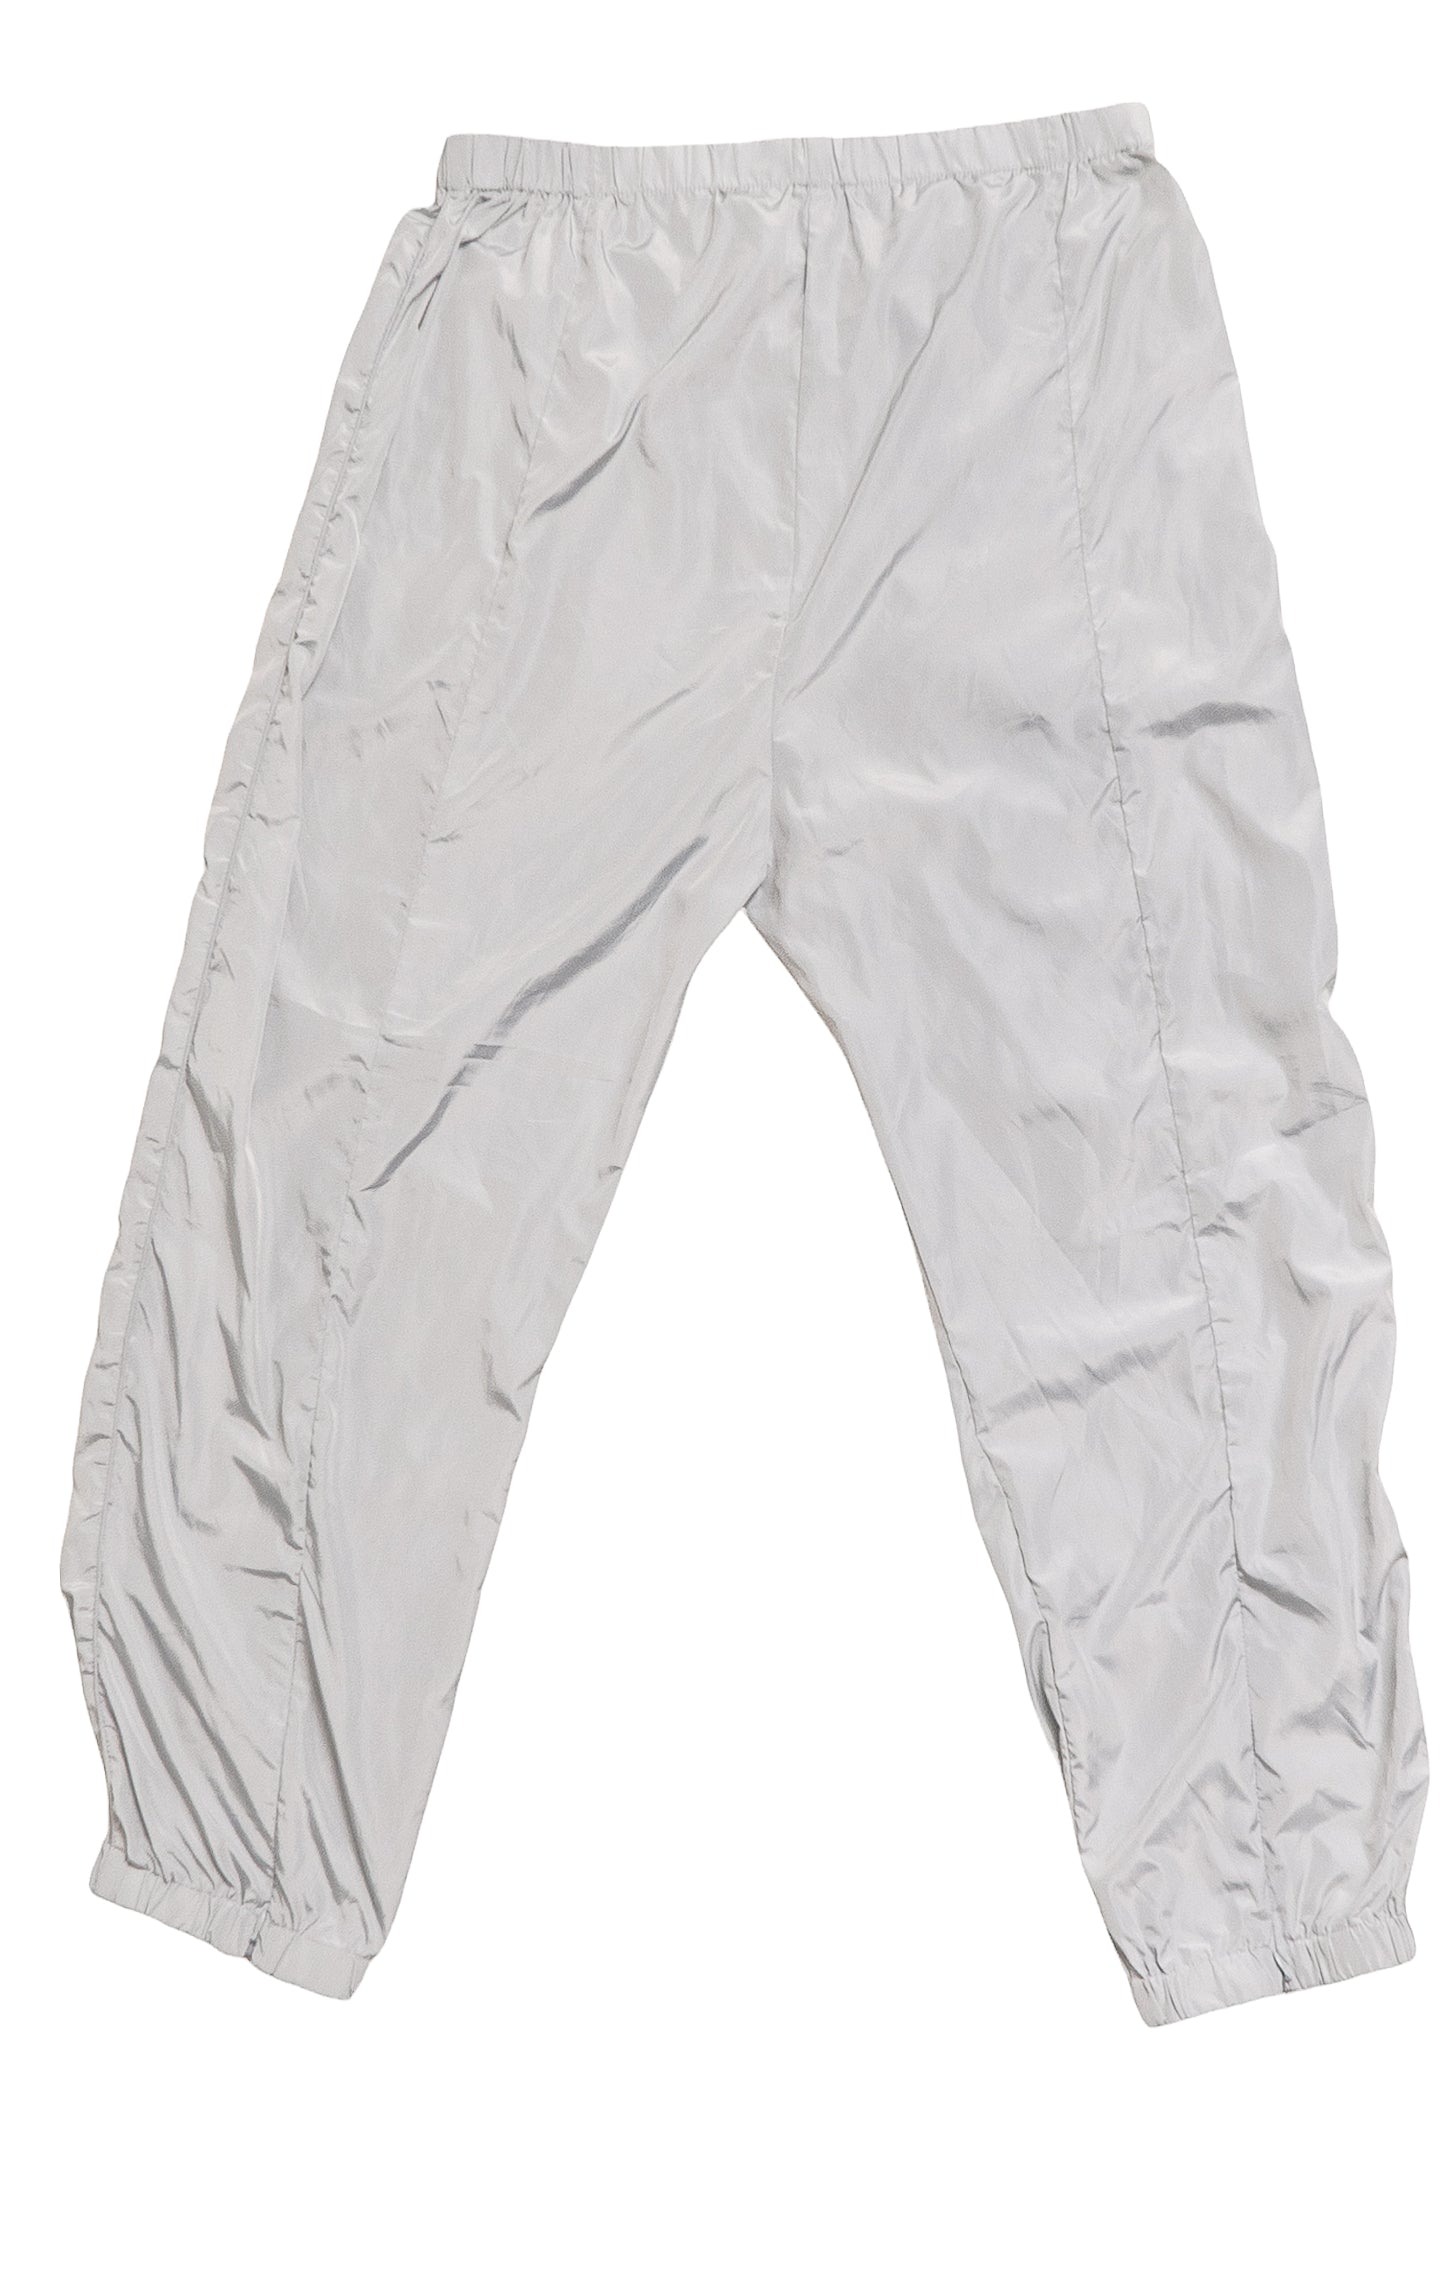 A-COLD-WALL* (RARE) Pants Size: XL